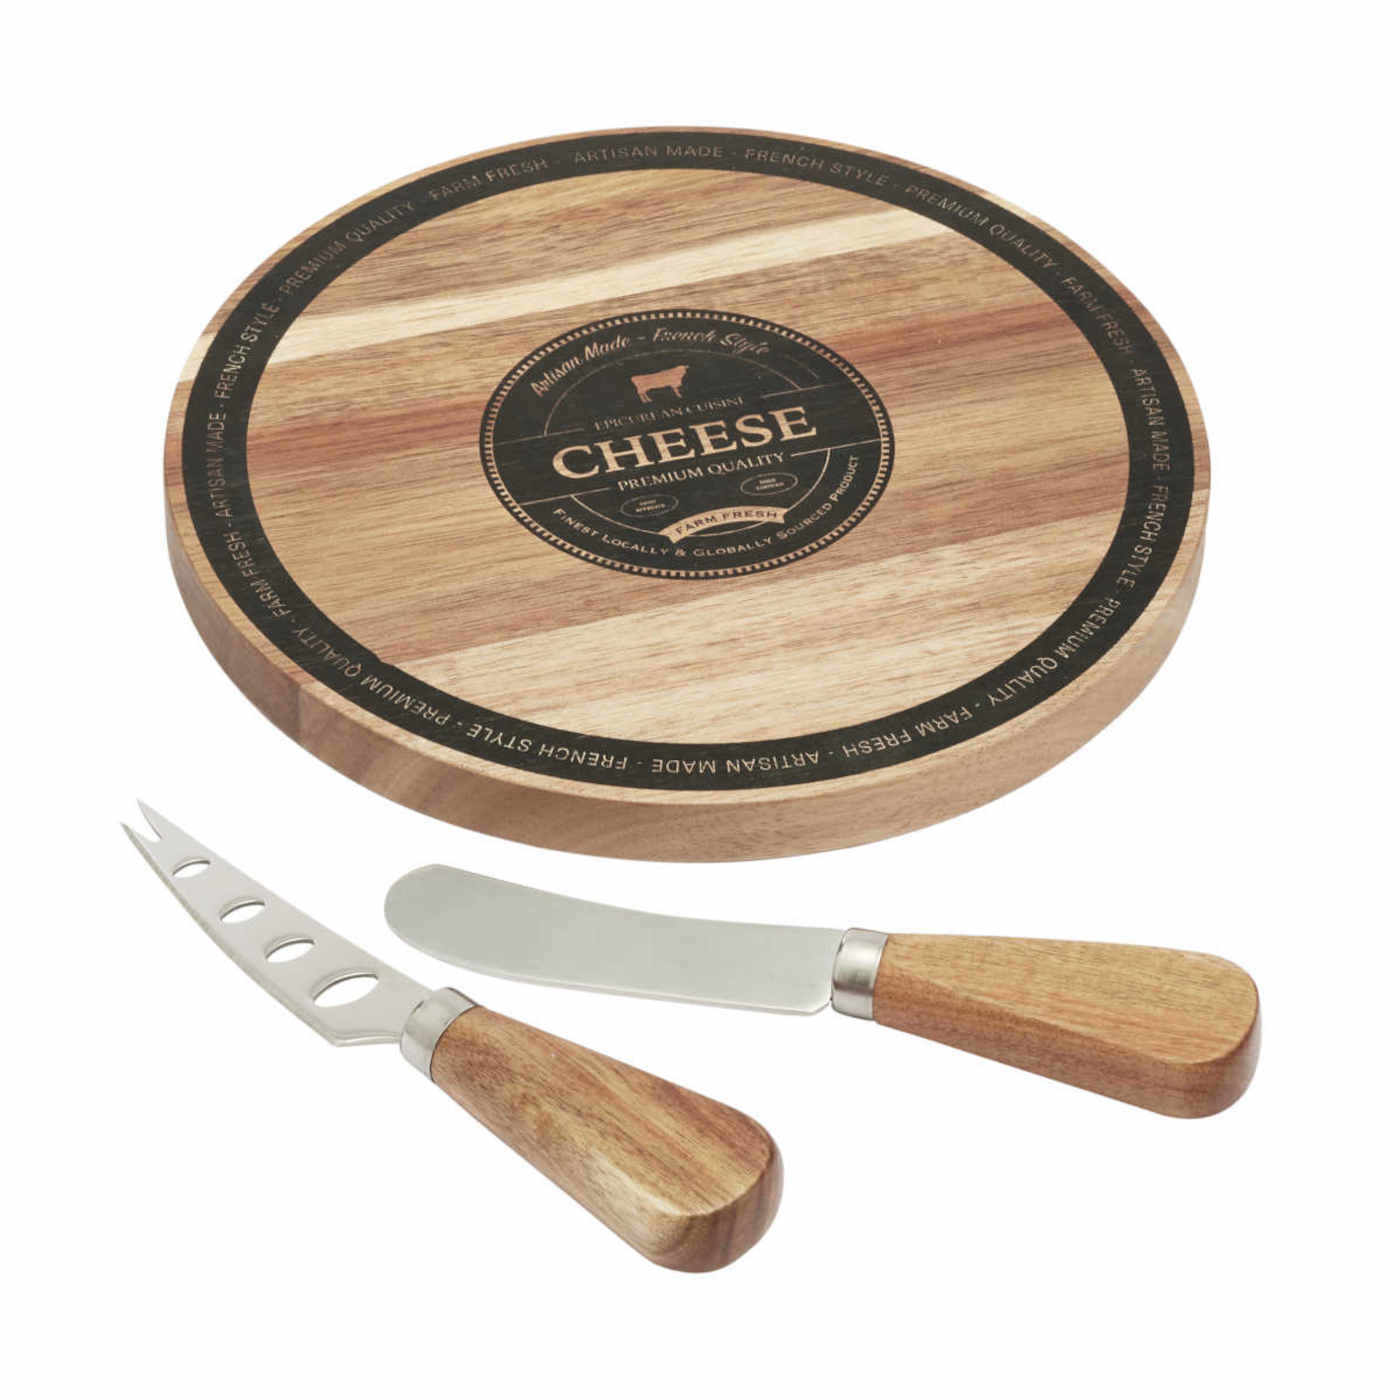 Epicurean Cuisine Round Board Knives Set of 3